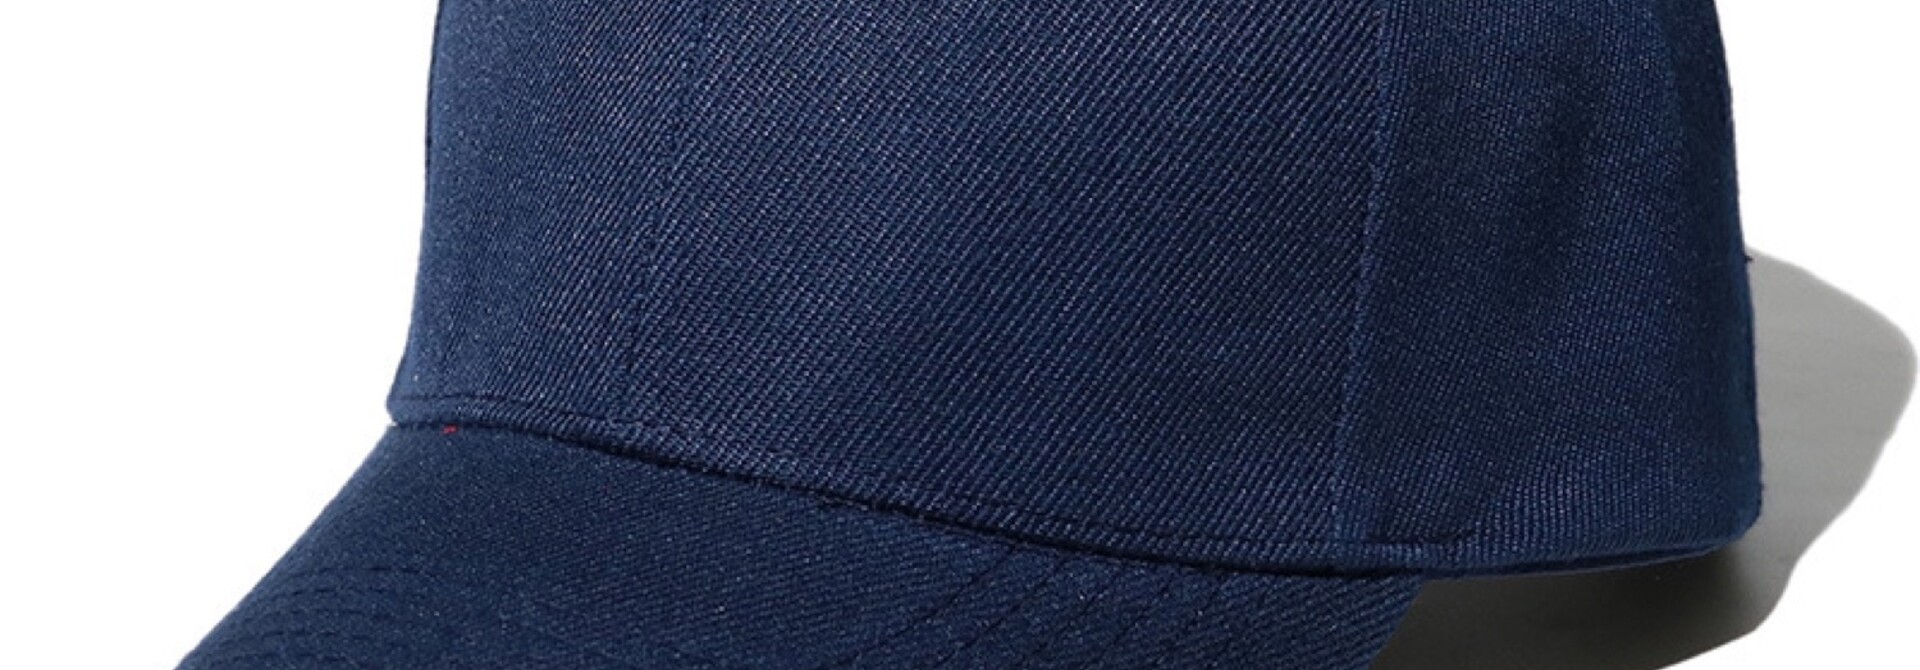 Baseball Cap Herren -  Basecap, Trucker Cap - Kopfumfang 55-60 CM - Kappe in Verstellbarer Größe - Blau